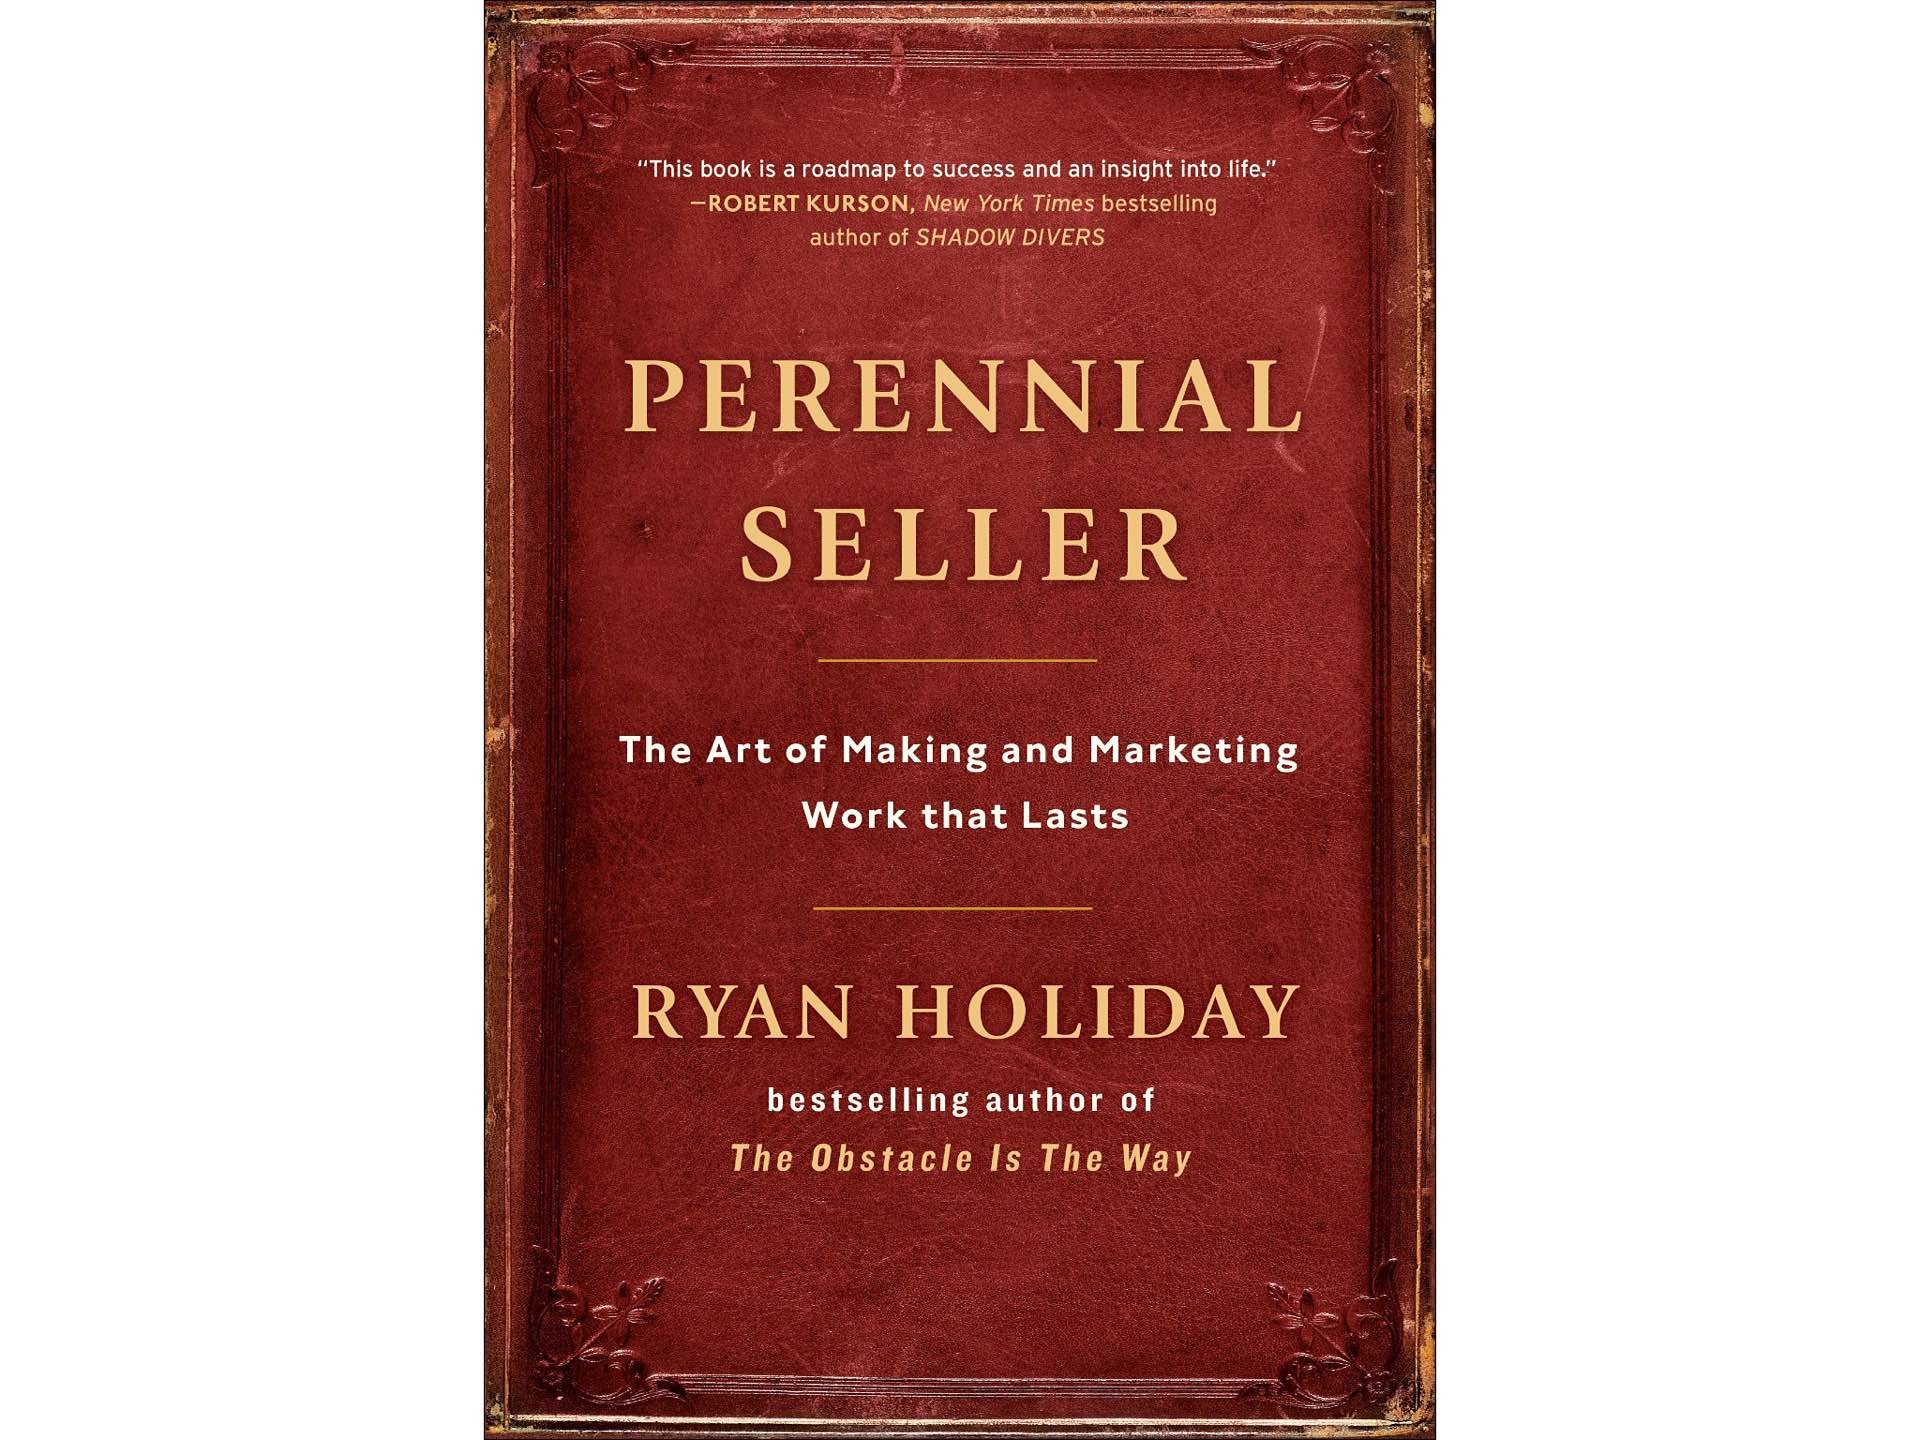 Perennial Seller by Ryan Holiday.